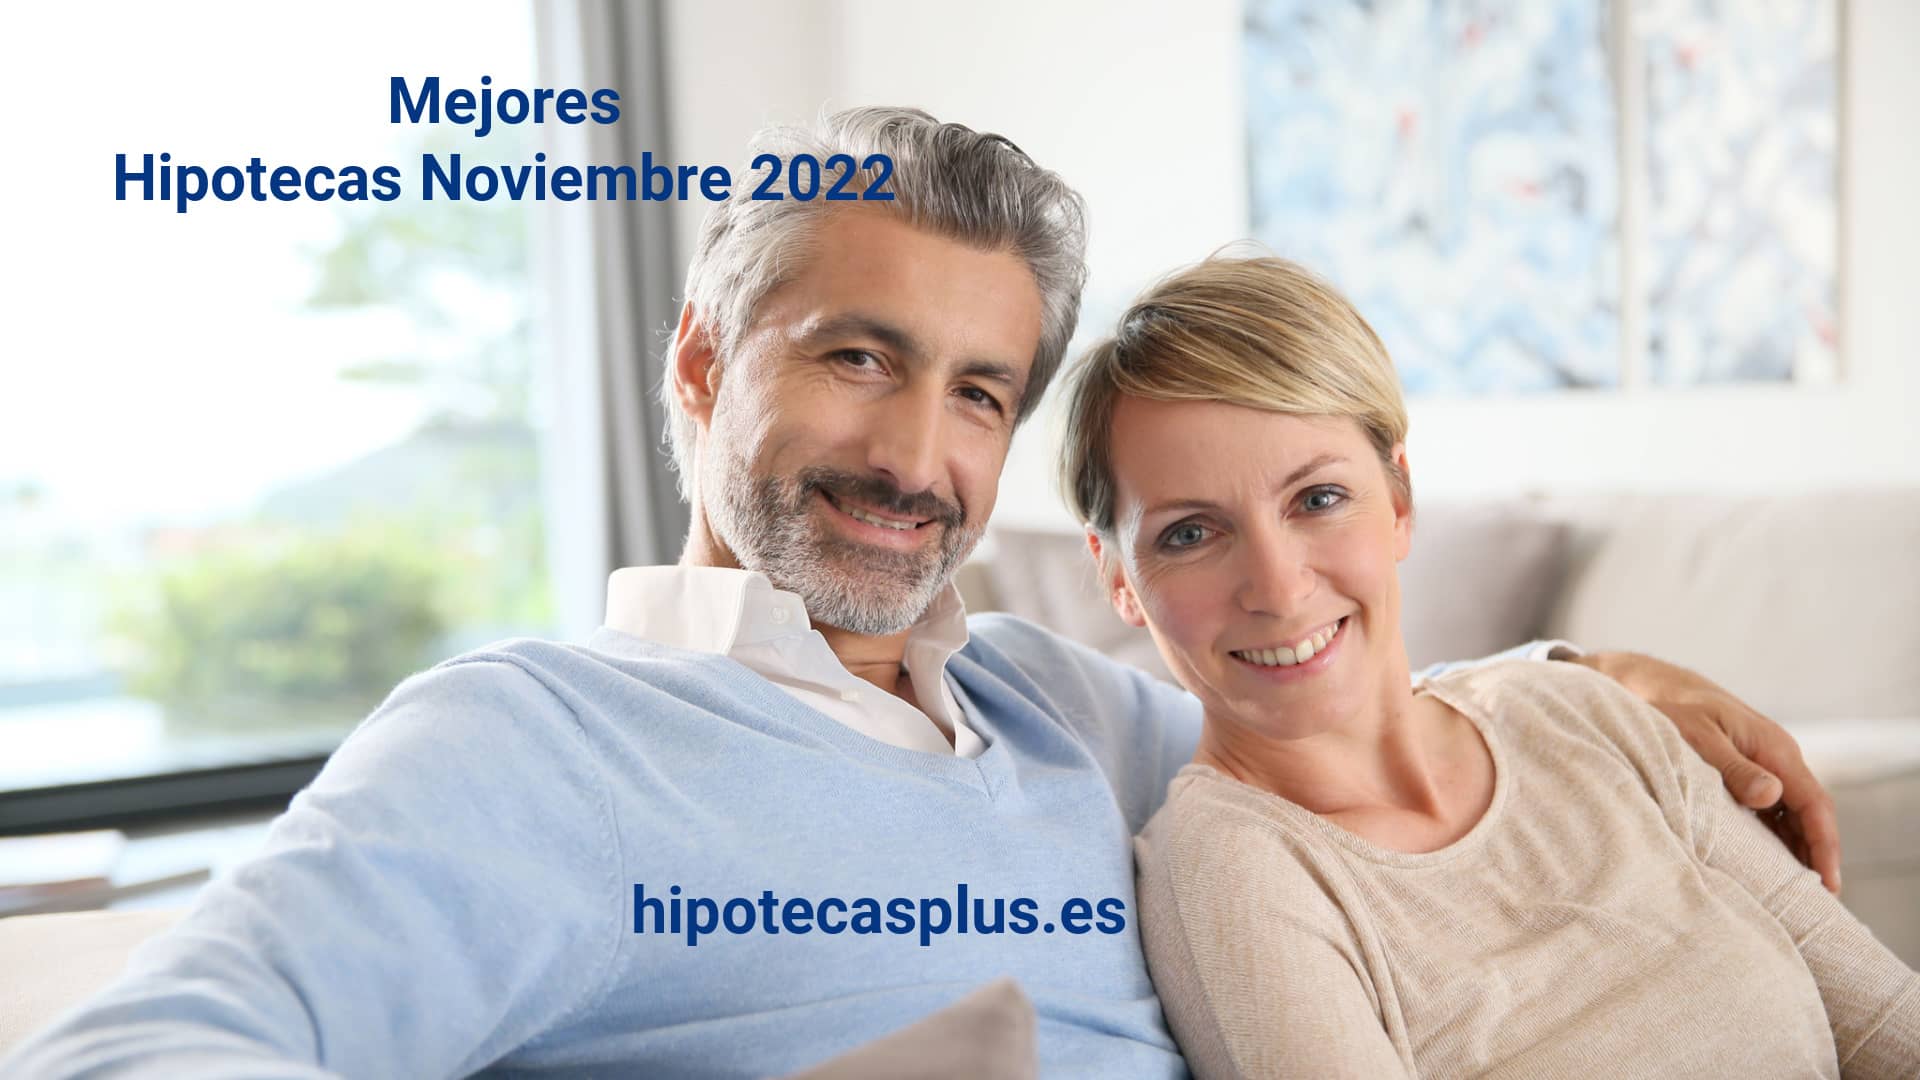 https://www.hipotecasplus.es/wp-content/uploads/HipotecasPlus-Mejores-hipotecas-Noviembre-2022.jpg